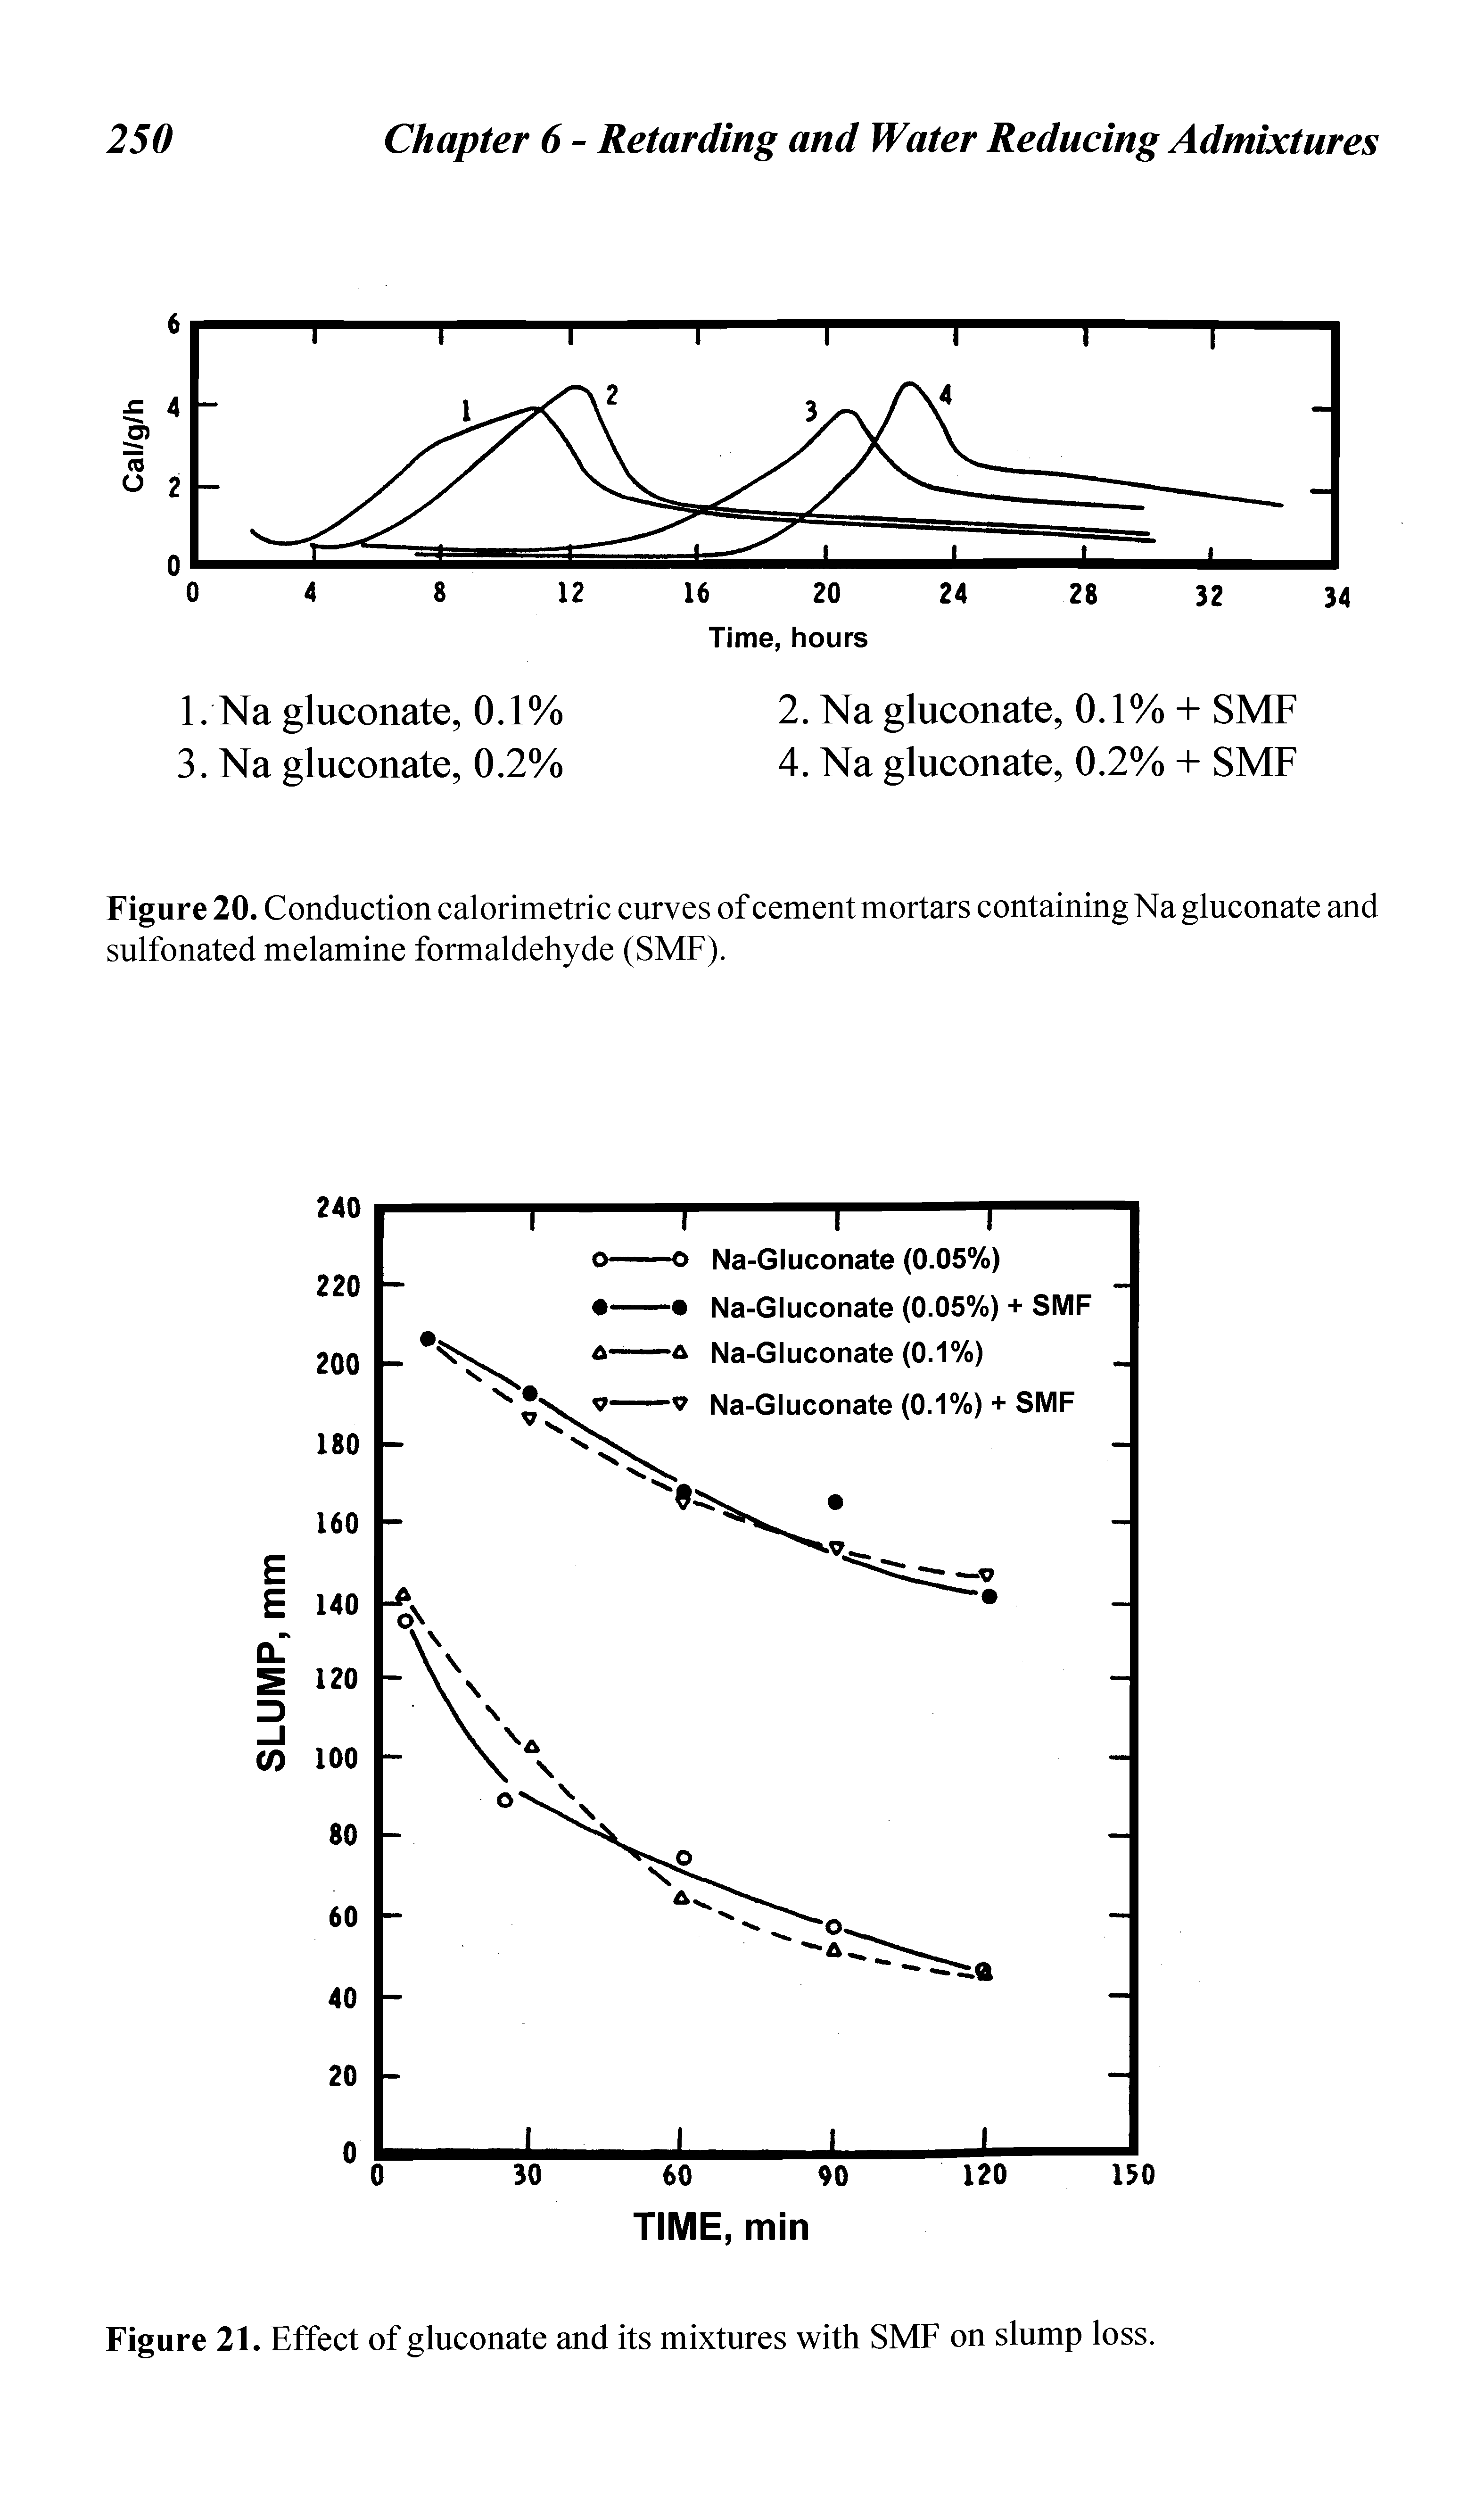 Figure 20. Conduction calorimetric curves of cement mortars containing Na gluconate and sulfonated melamine formaldehyde (SMF).